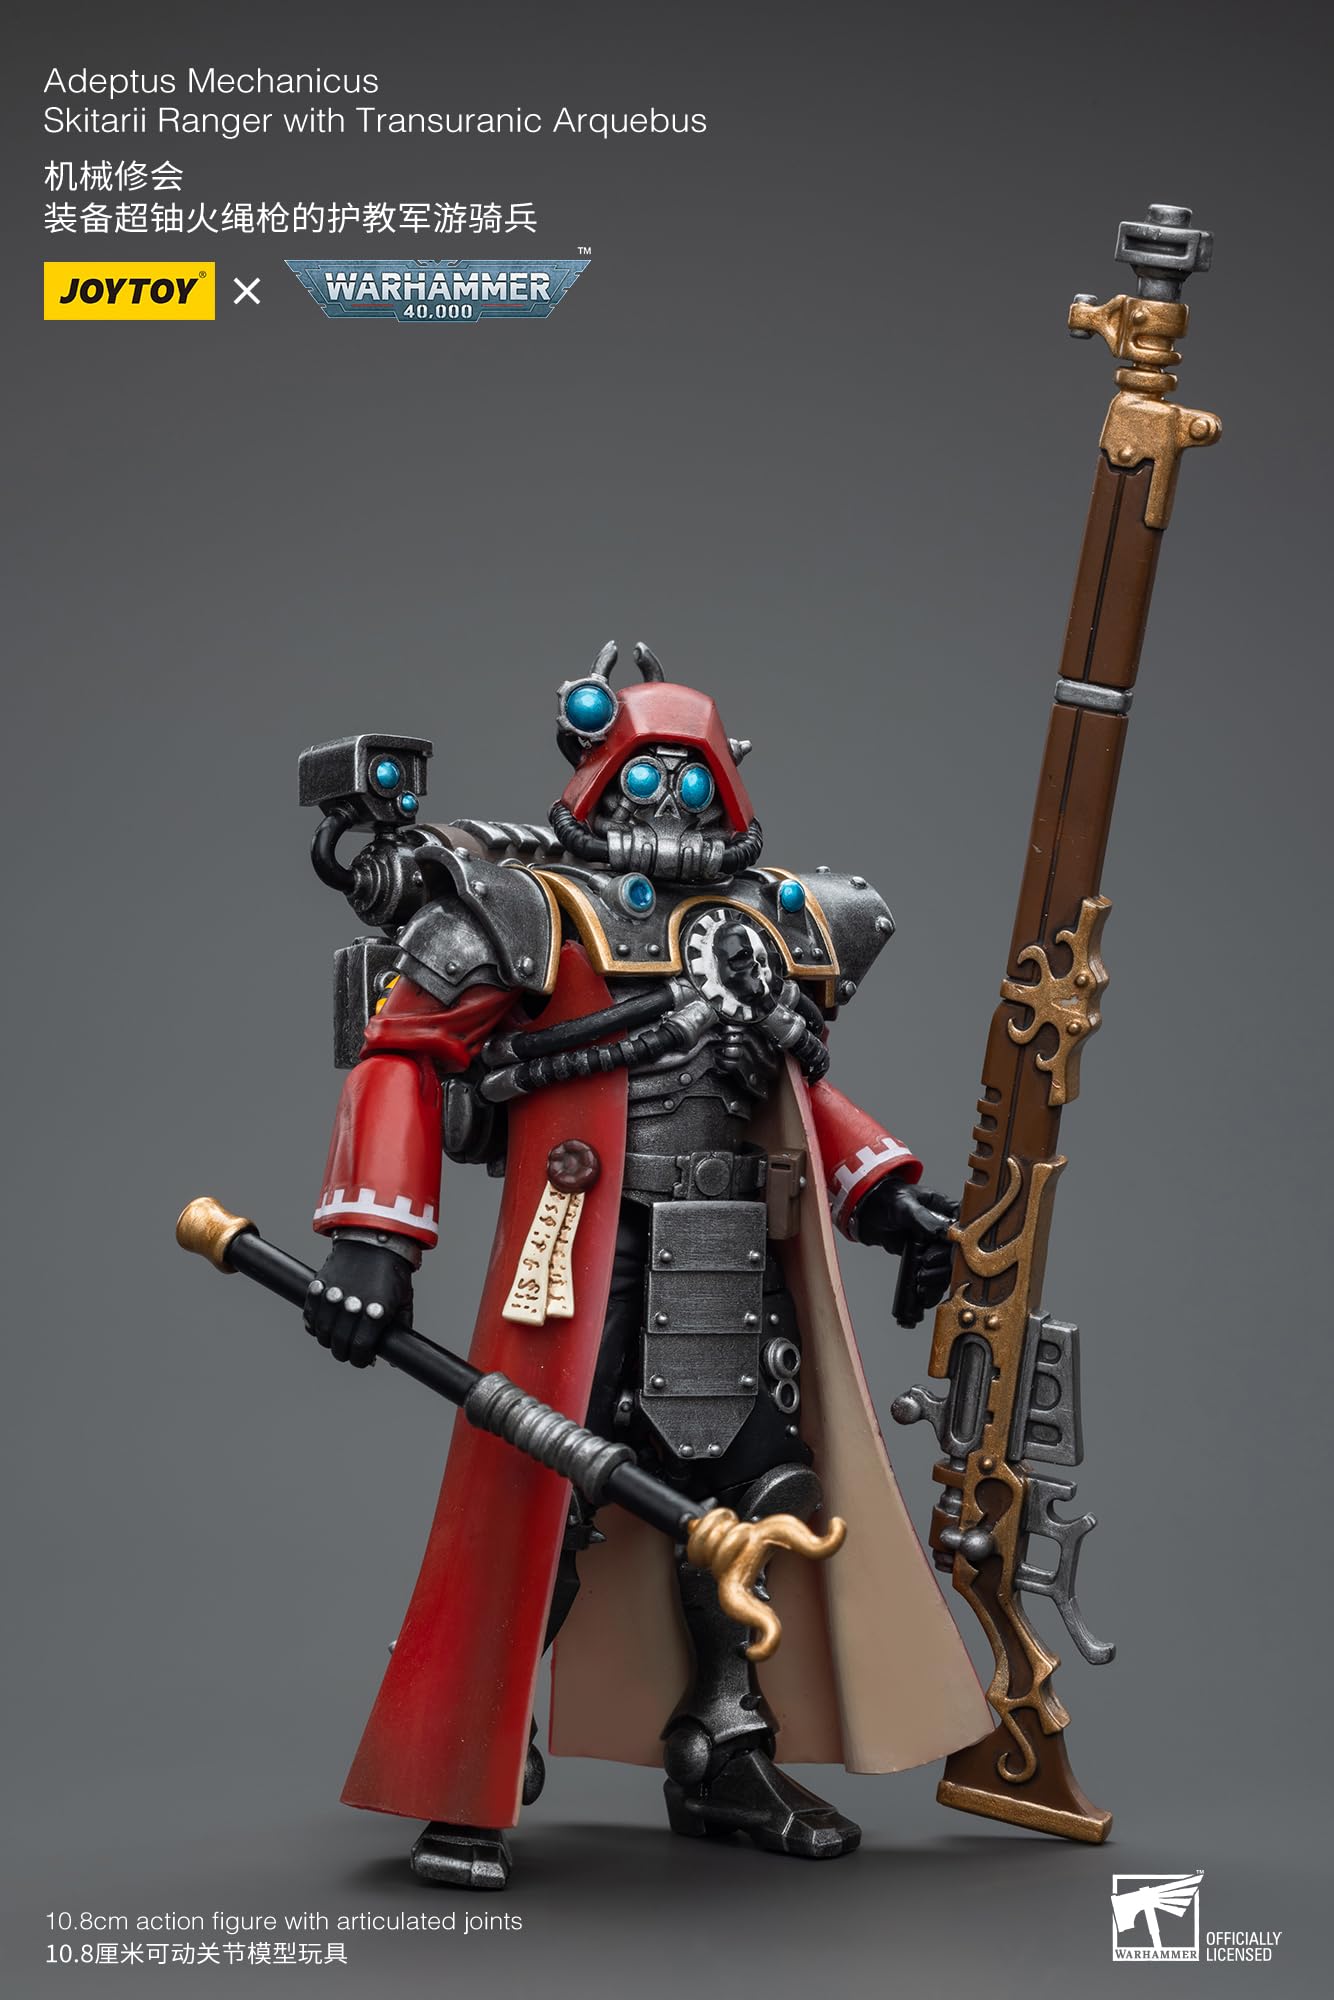 JoyToy Warhammer 40K: Adeptus Mechanicus Skitarii Ranger with Transuranic Arquebus 1:18 Scale Action Figure